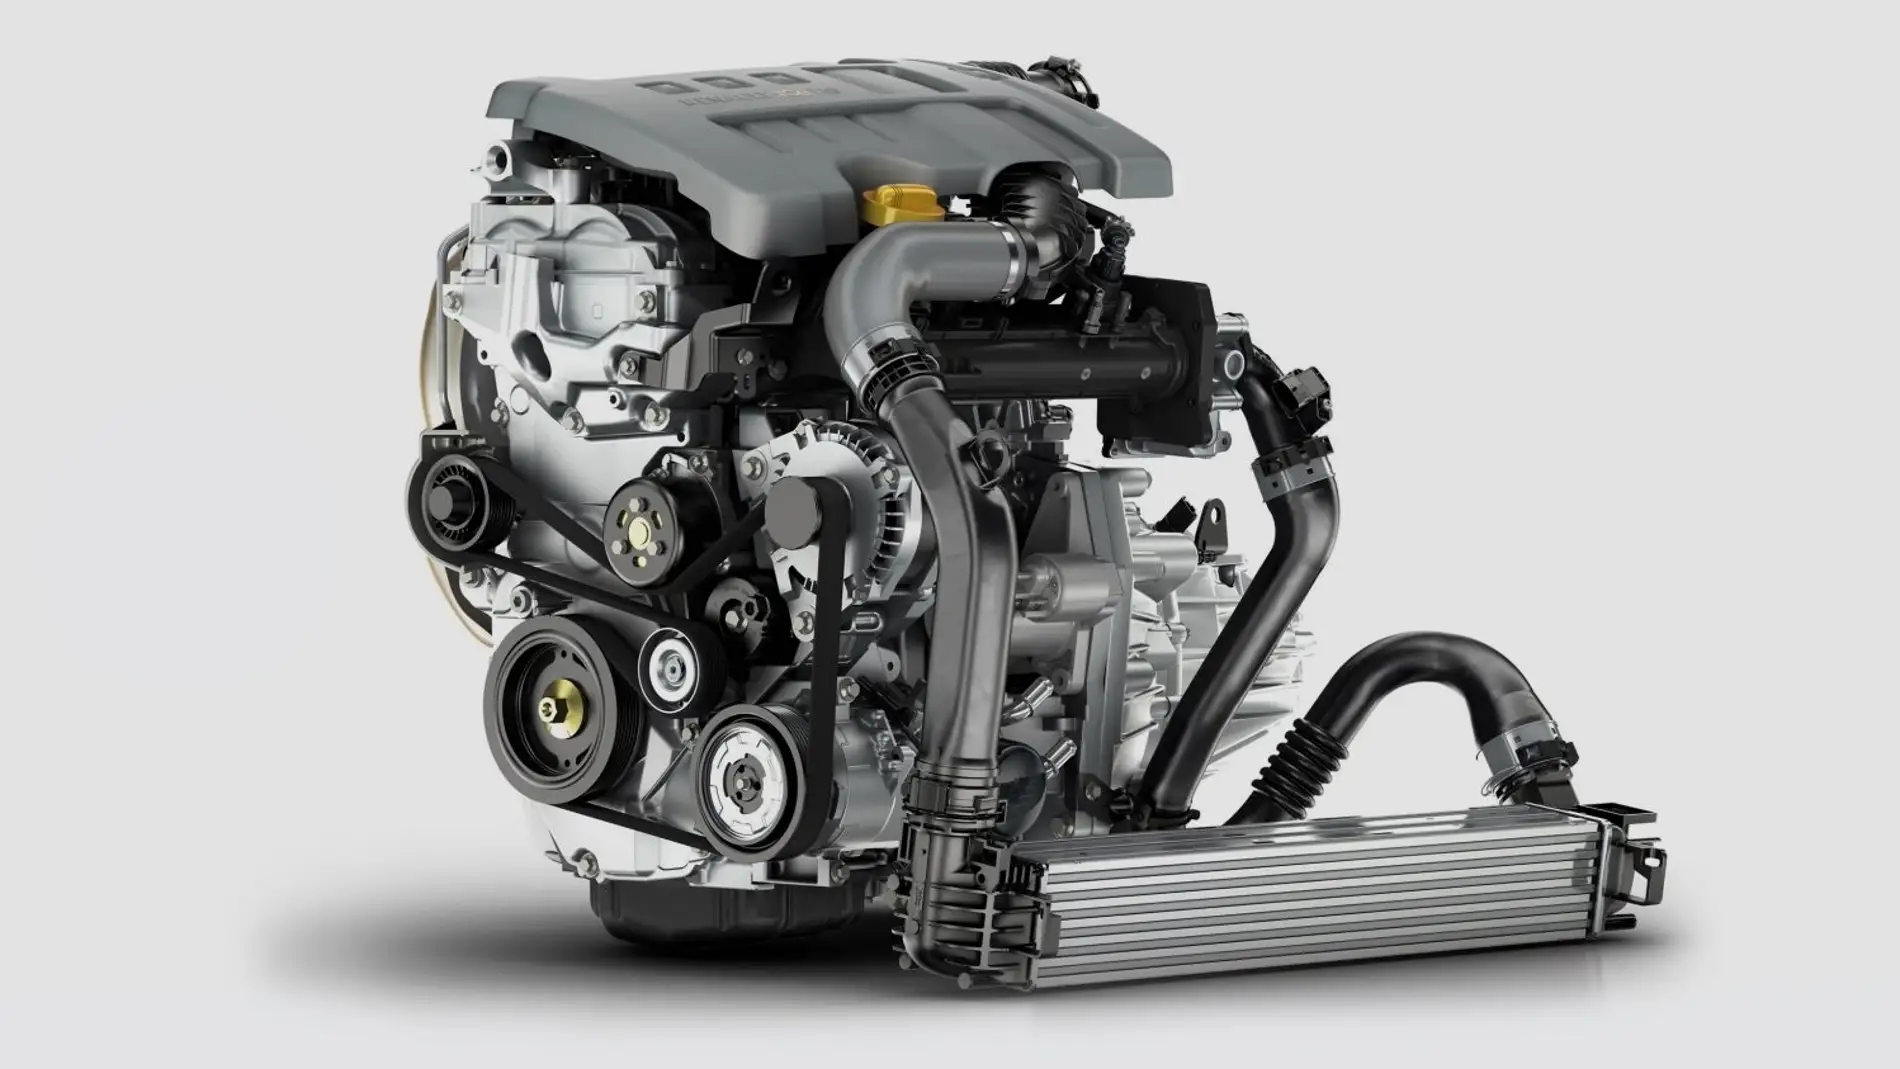 Motor Renault H5FT defectuoso